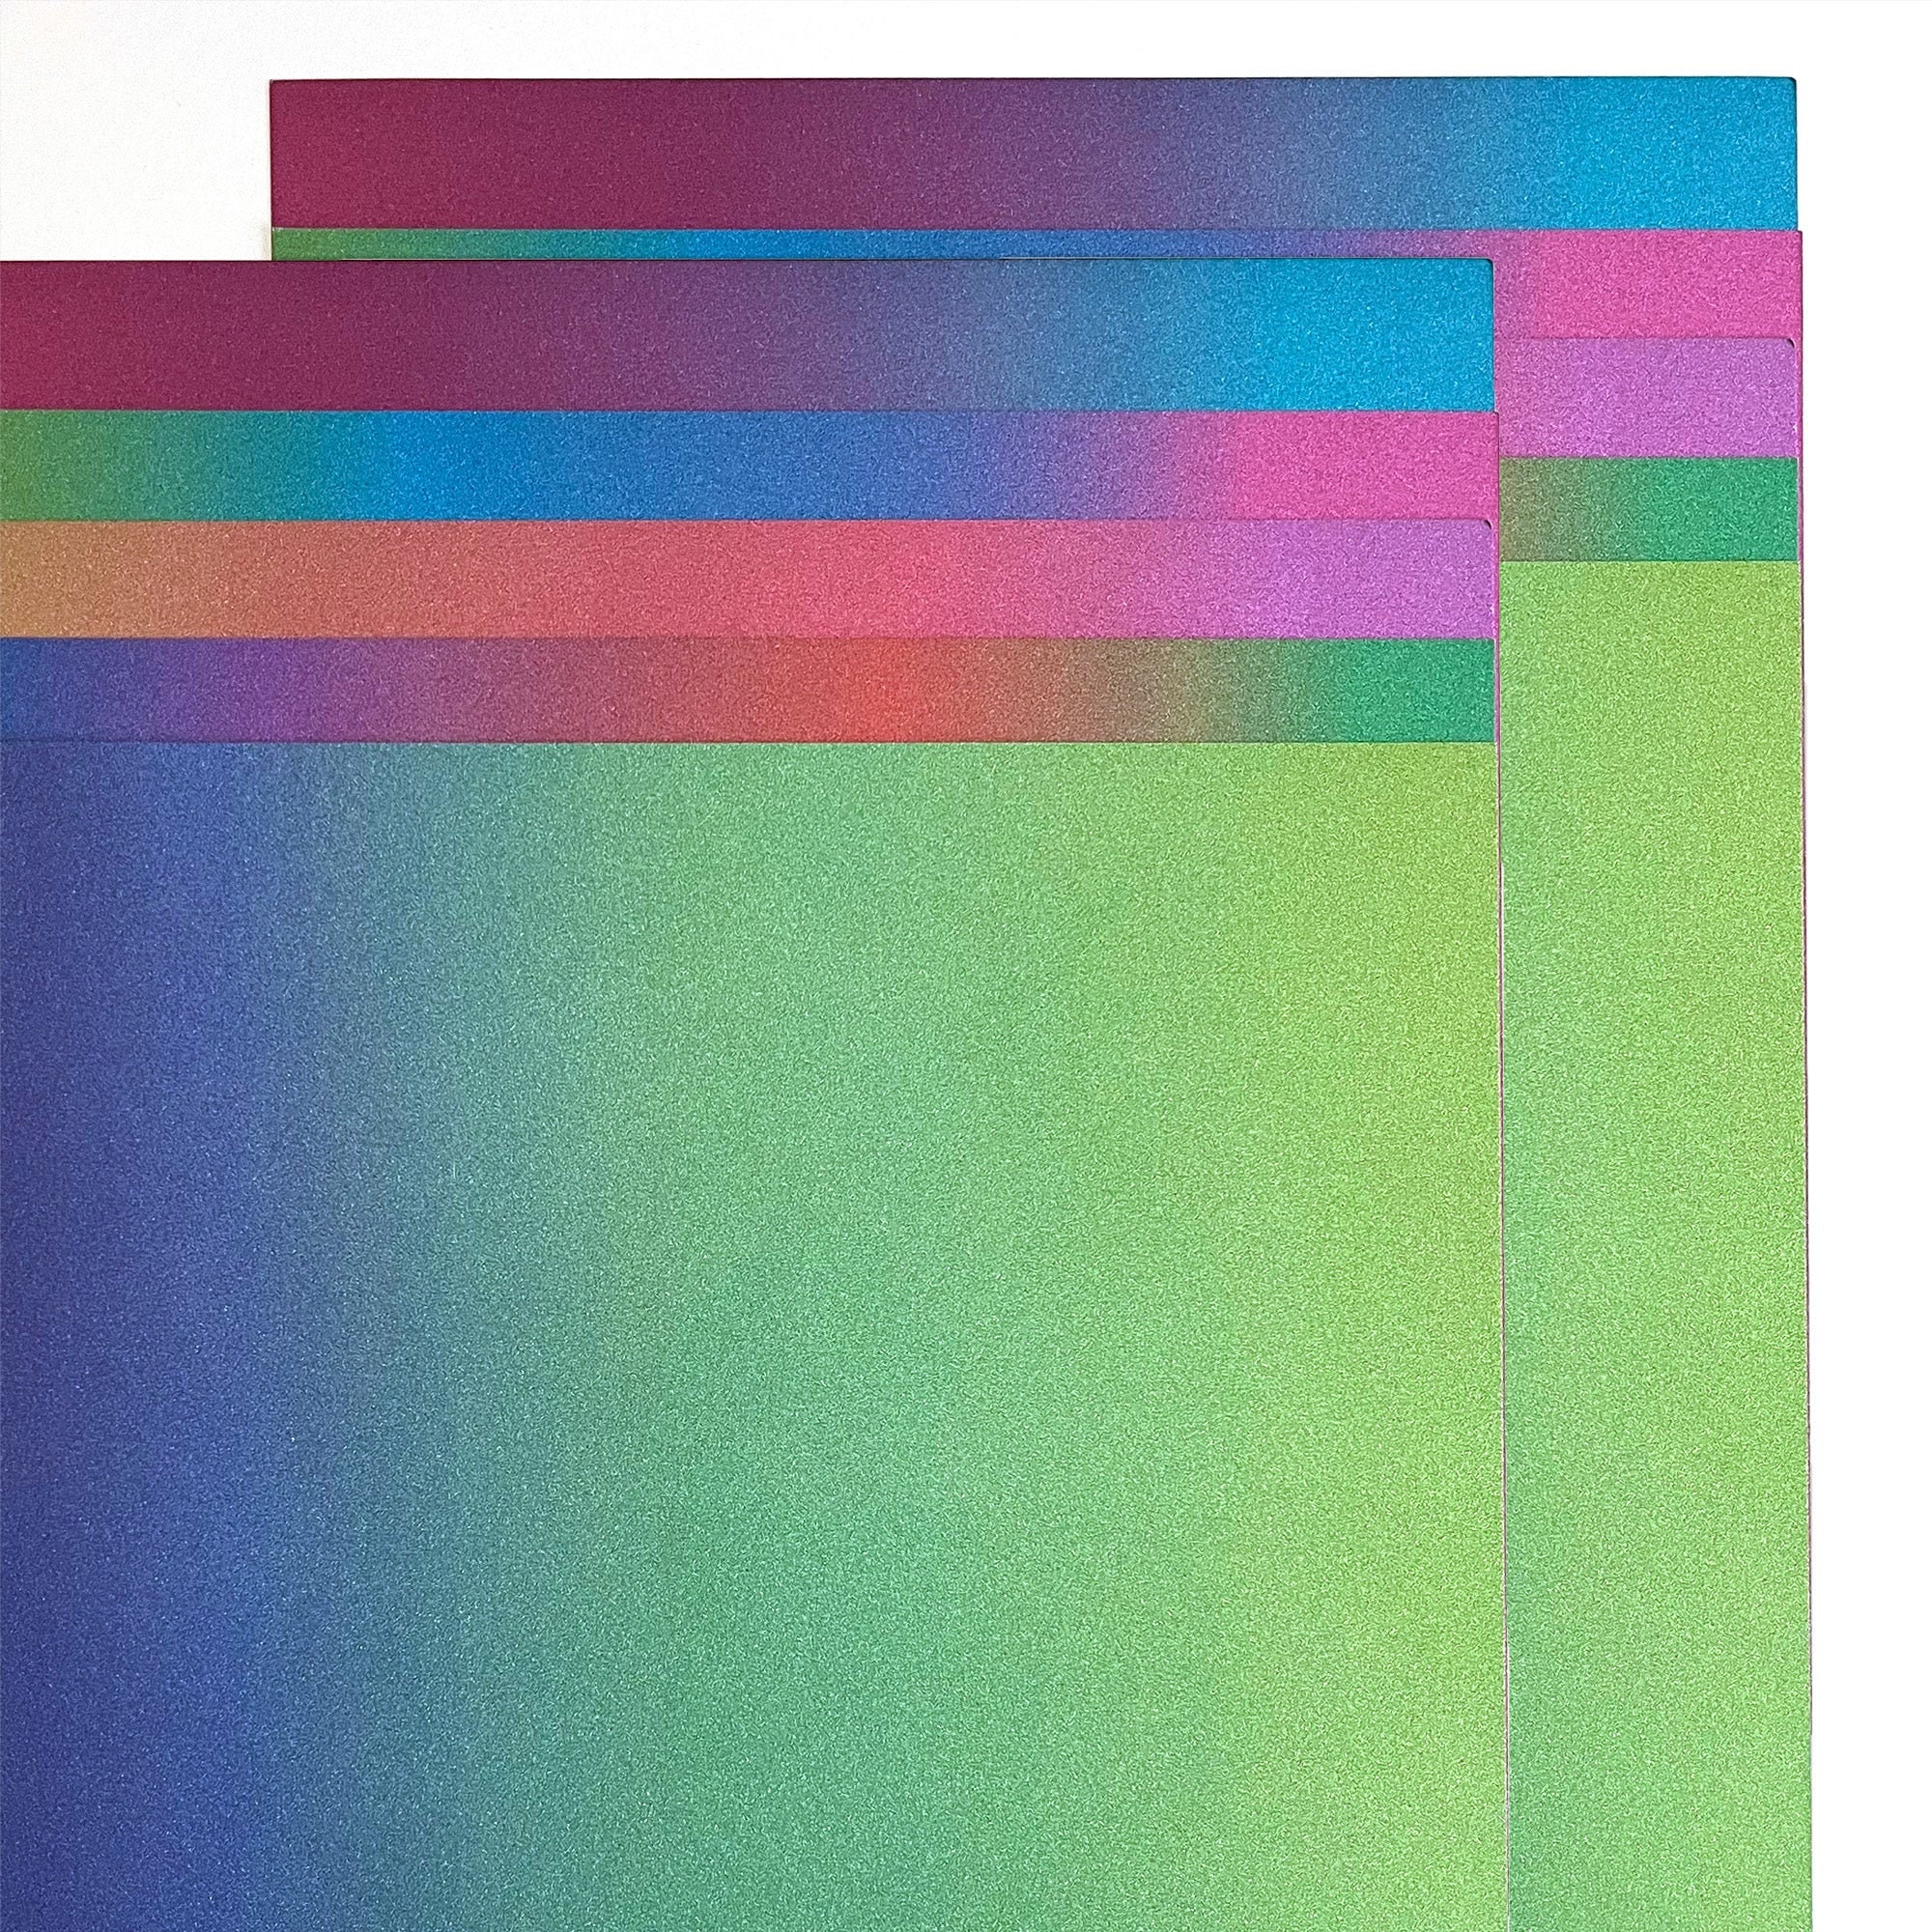 Over 100 Sheets! 8.5 x 11 Premium CARDSTOCK PAPER - 21 Bright Rainbow  Colors